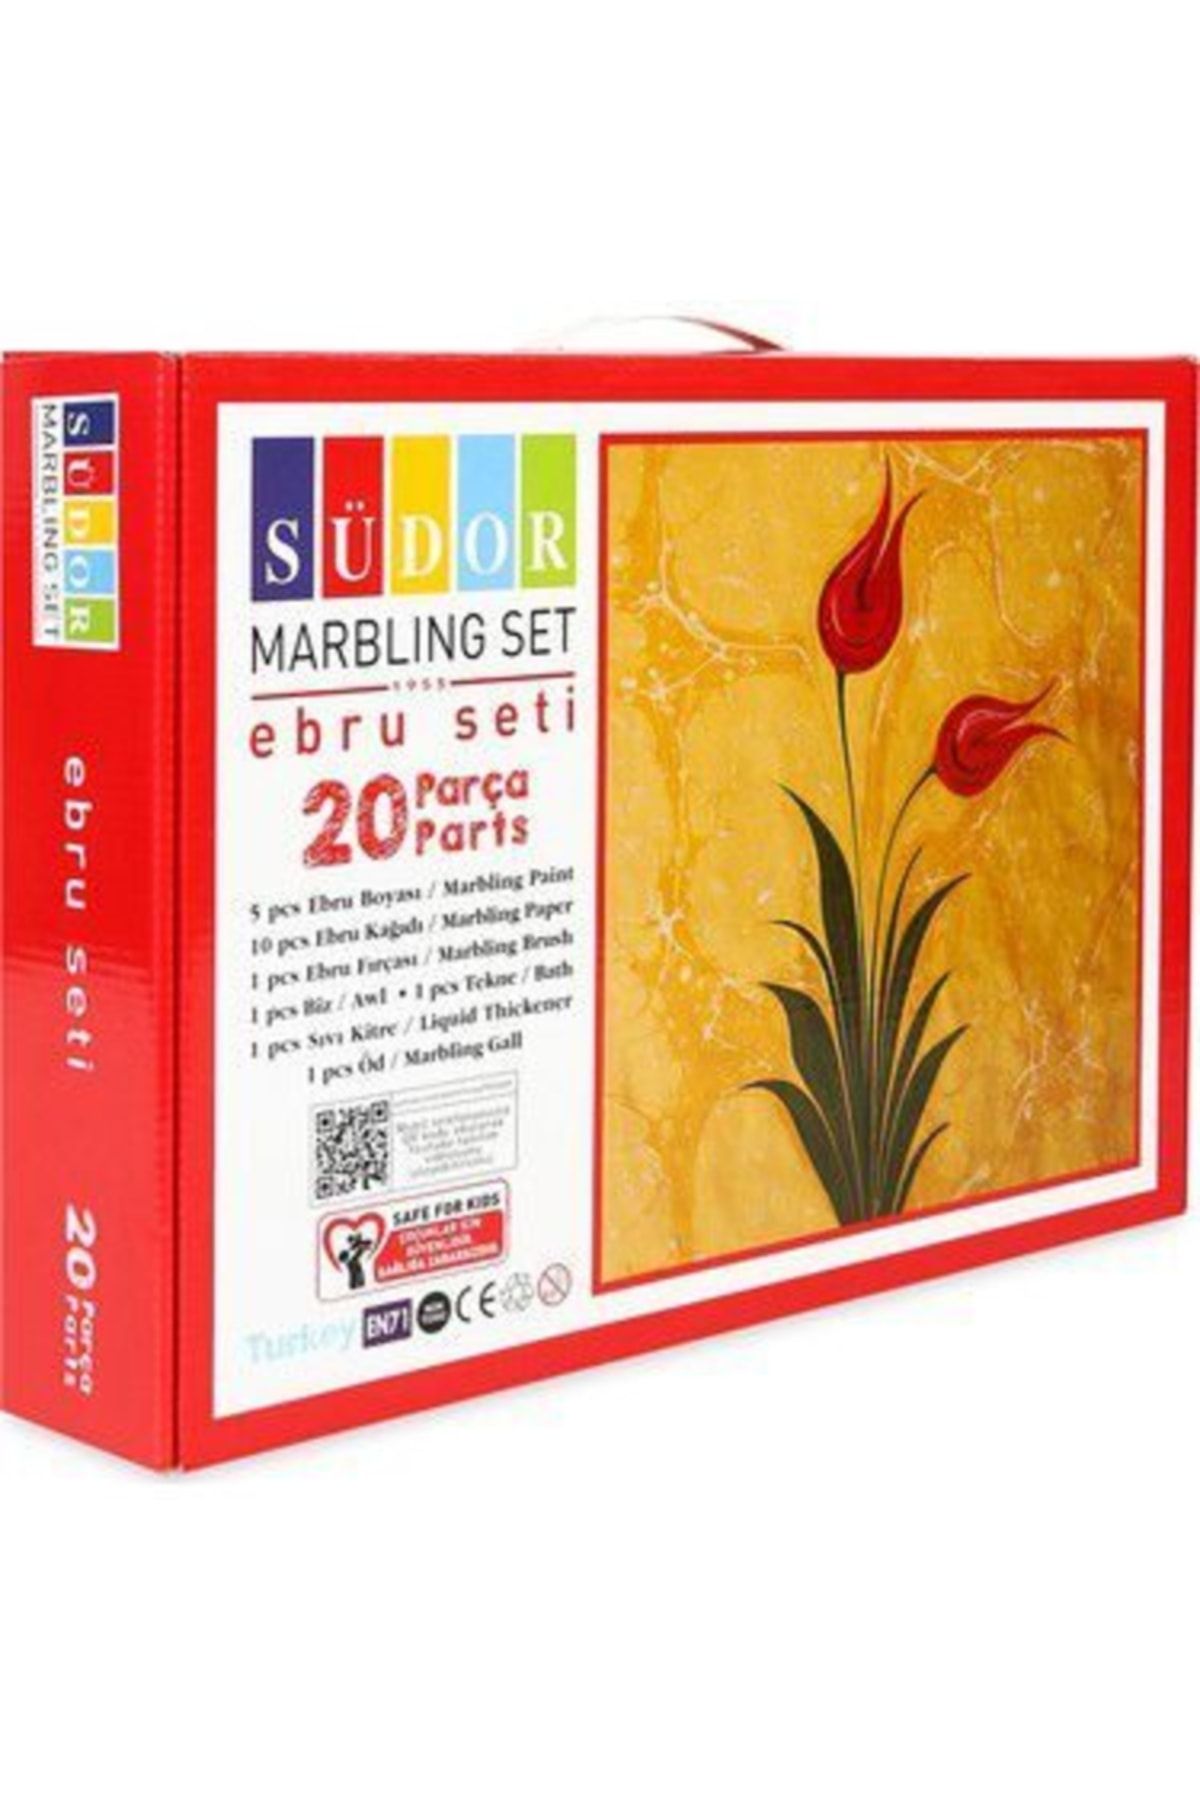 Südor 20 Parça Ebru Seti Ebru Sanatı Hobi Seti Eğitici Marblıng Sanatsal Set